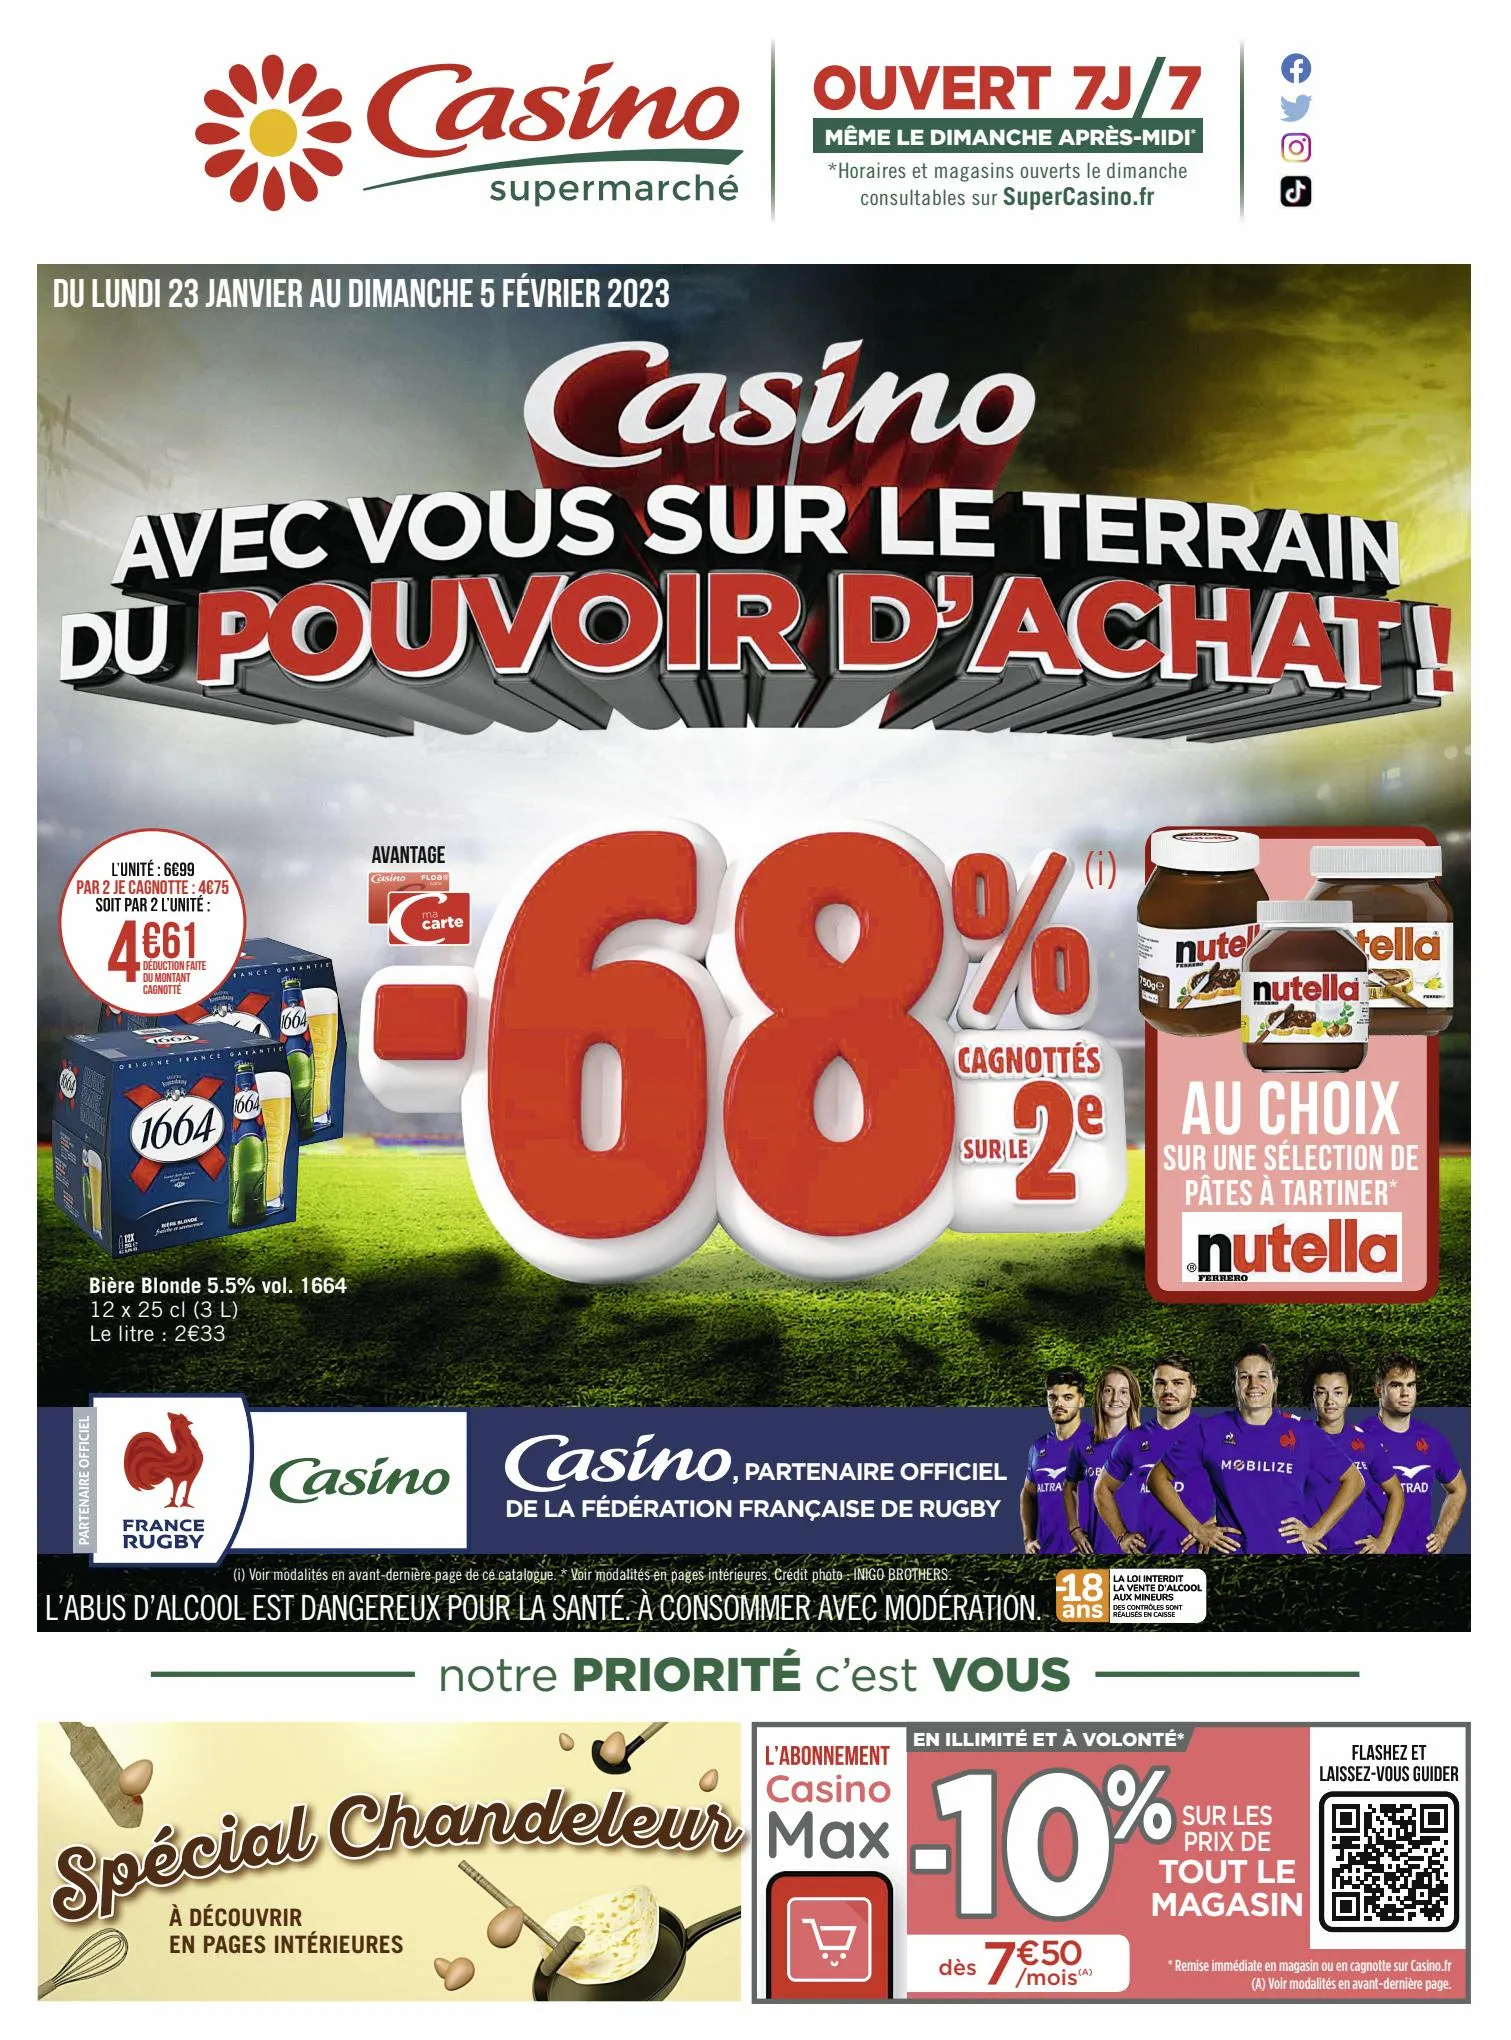 Catalogue Catalogue Casino Supermarchés, page 00001